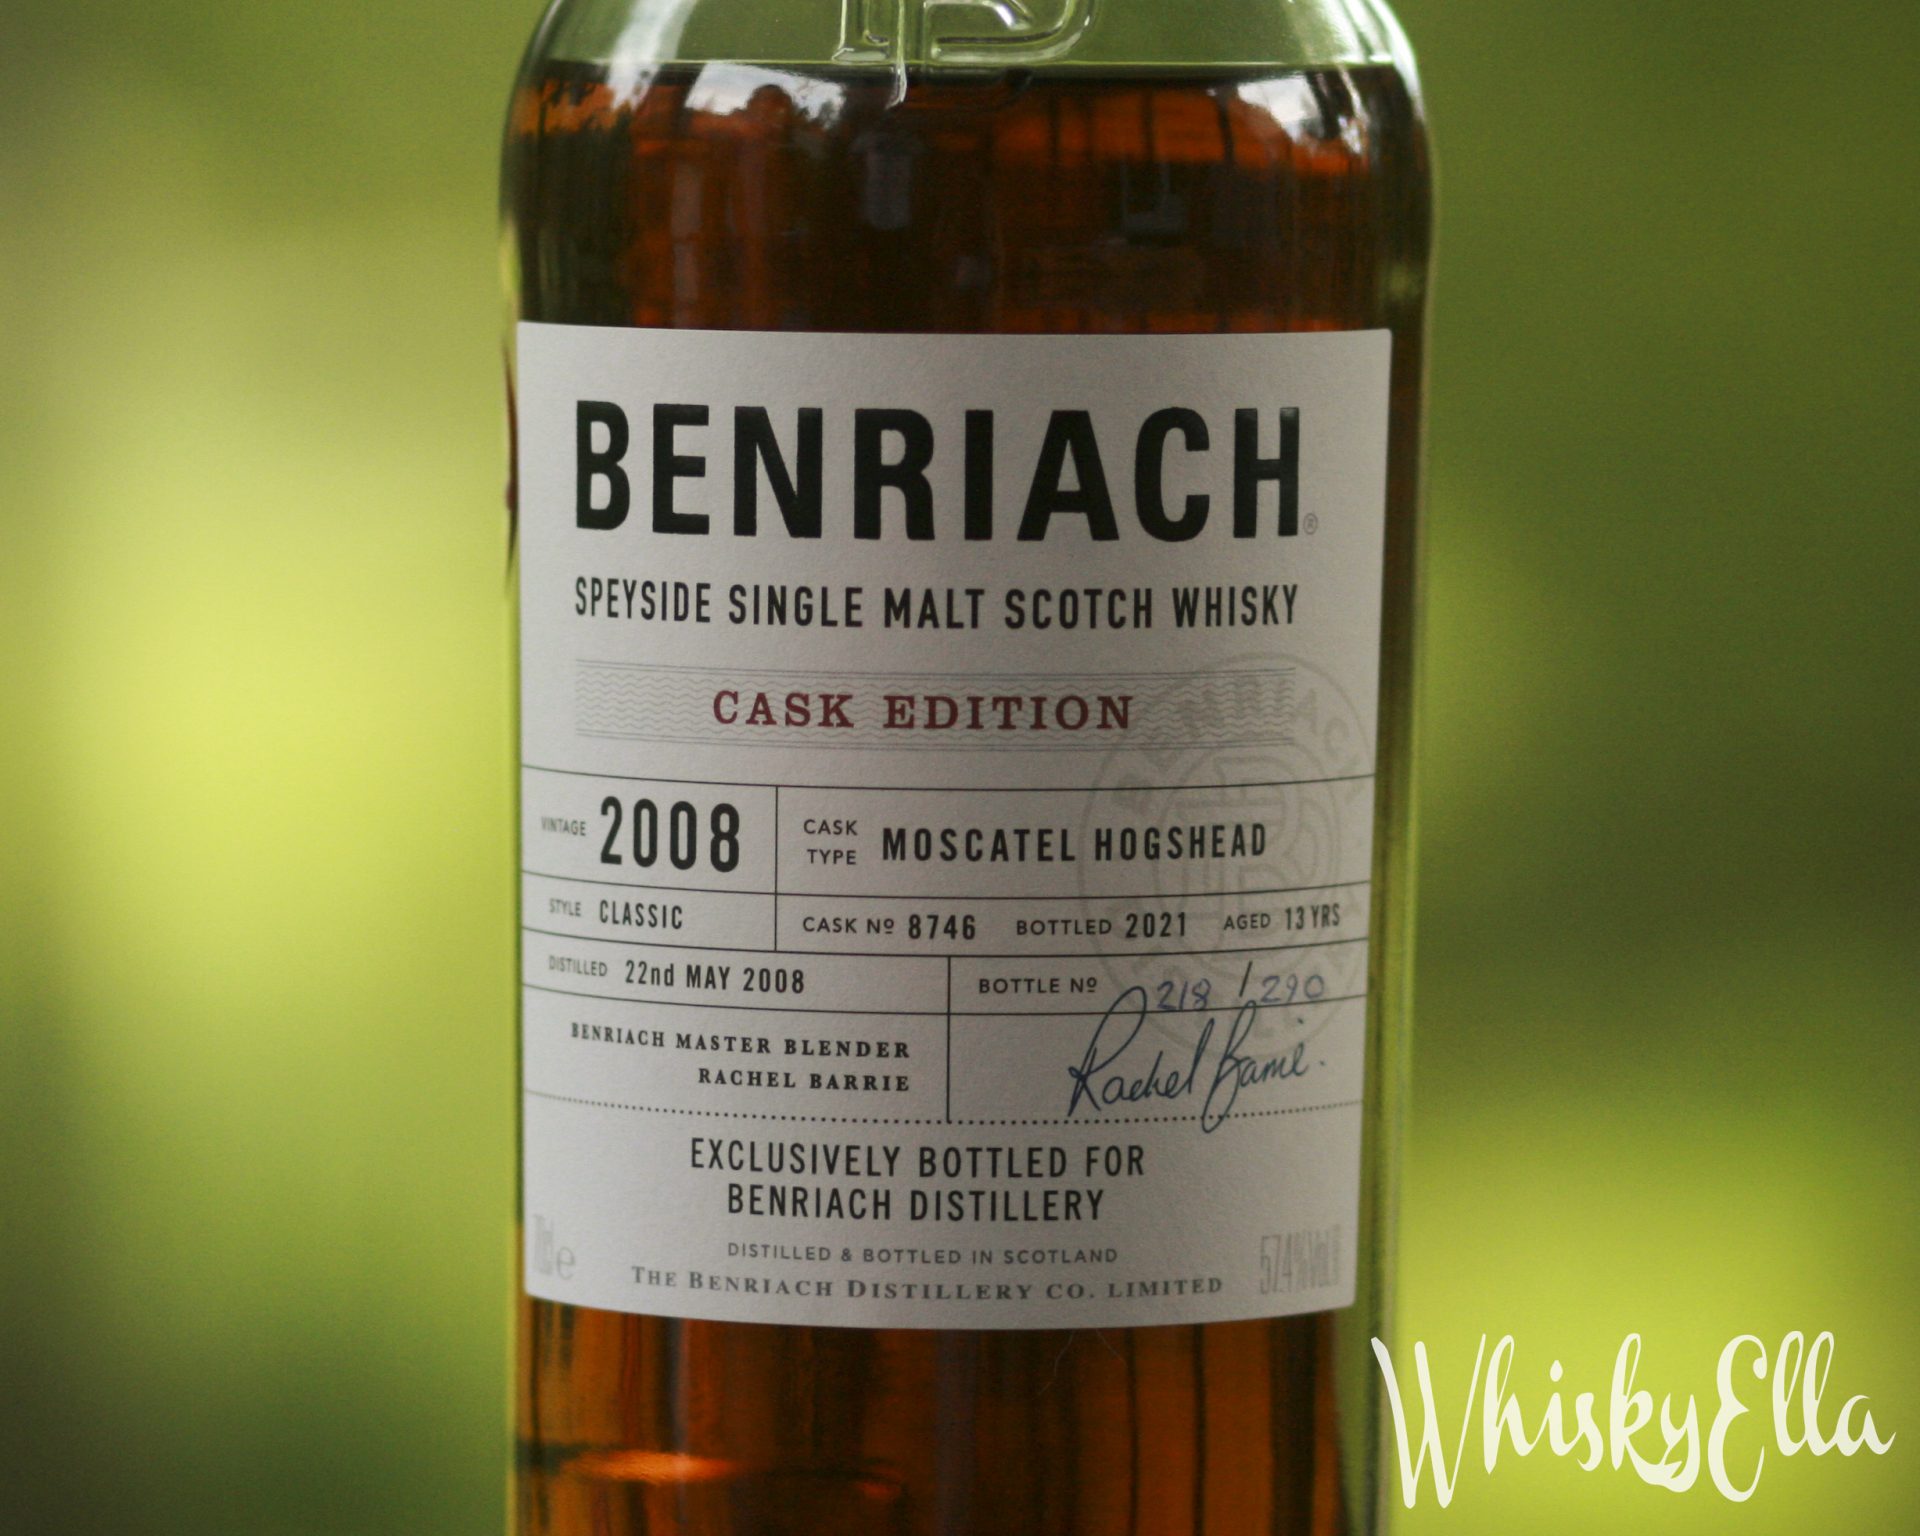 Nasza recenzja Benriach 2008 13yo Cask Edition Moscatel Hogshead cask no. 8746 Benriach Distillery Exclusive #158